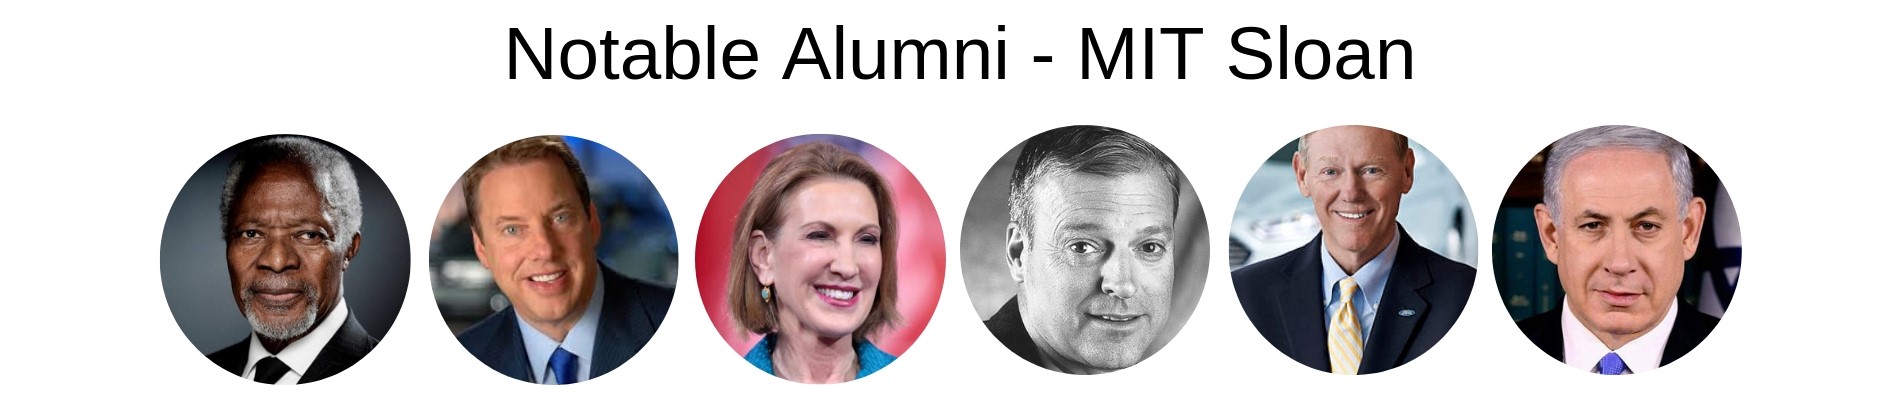 MIT Sloan - Notable Alumni